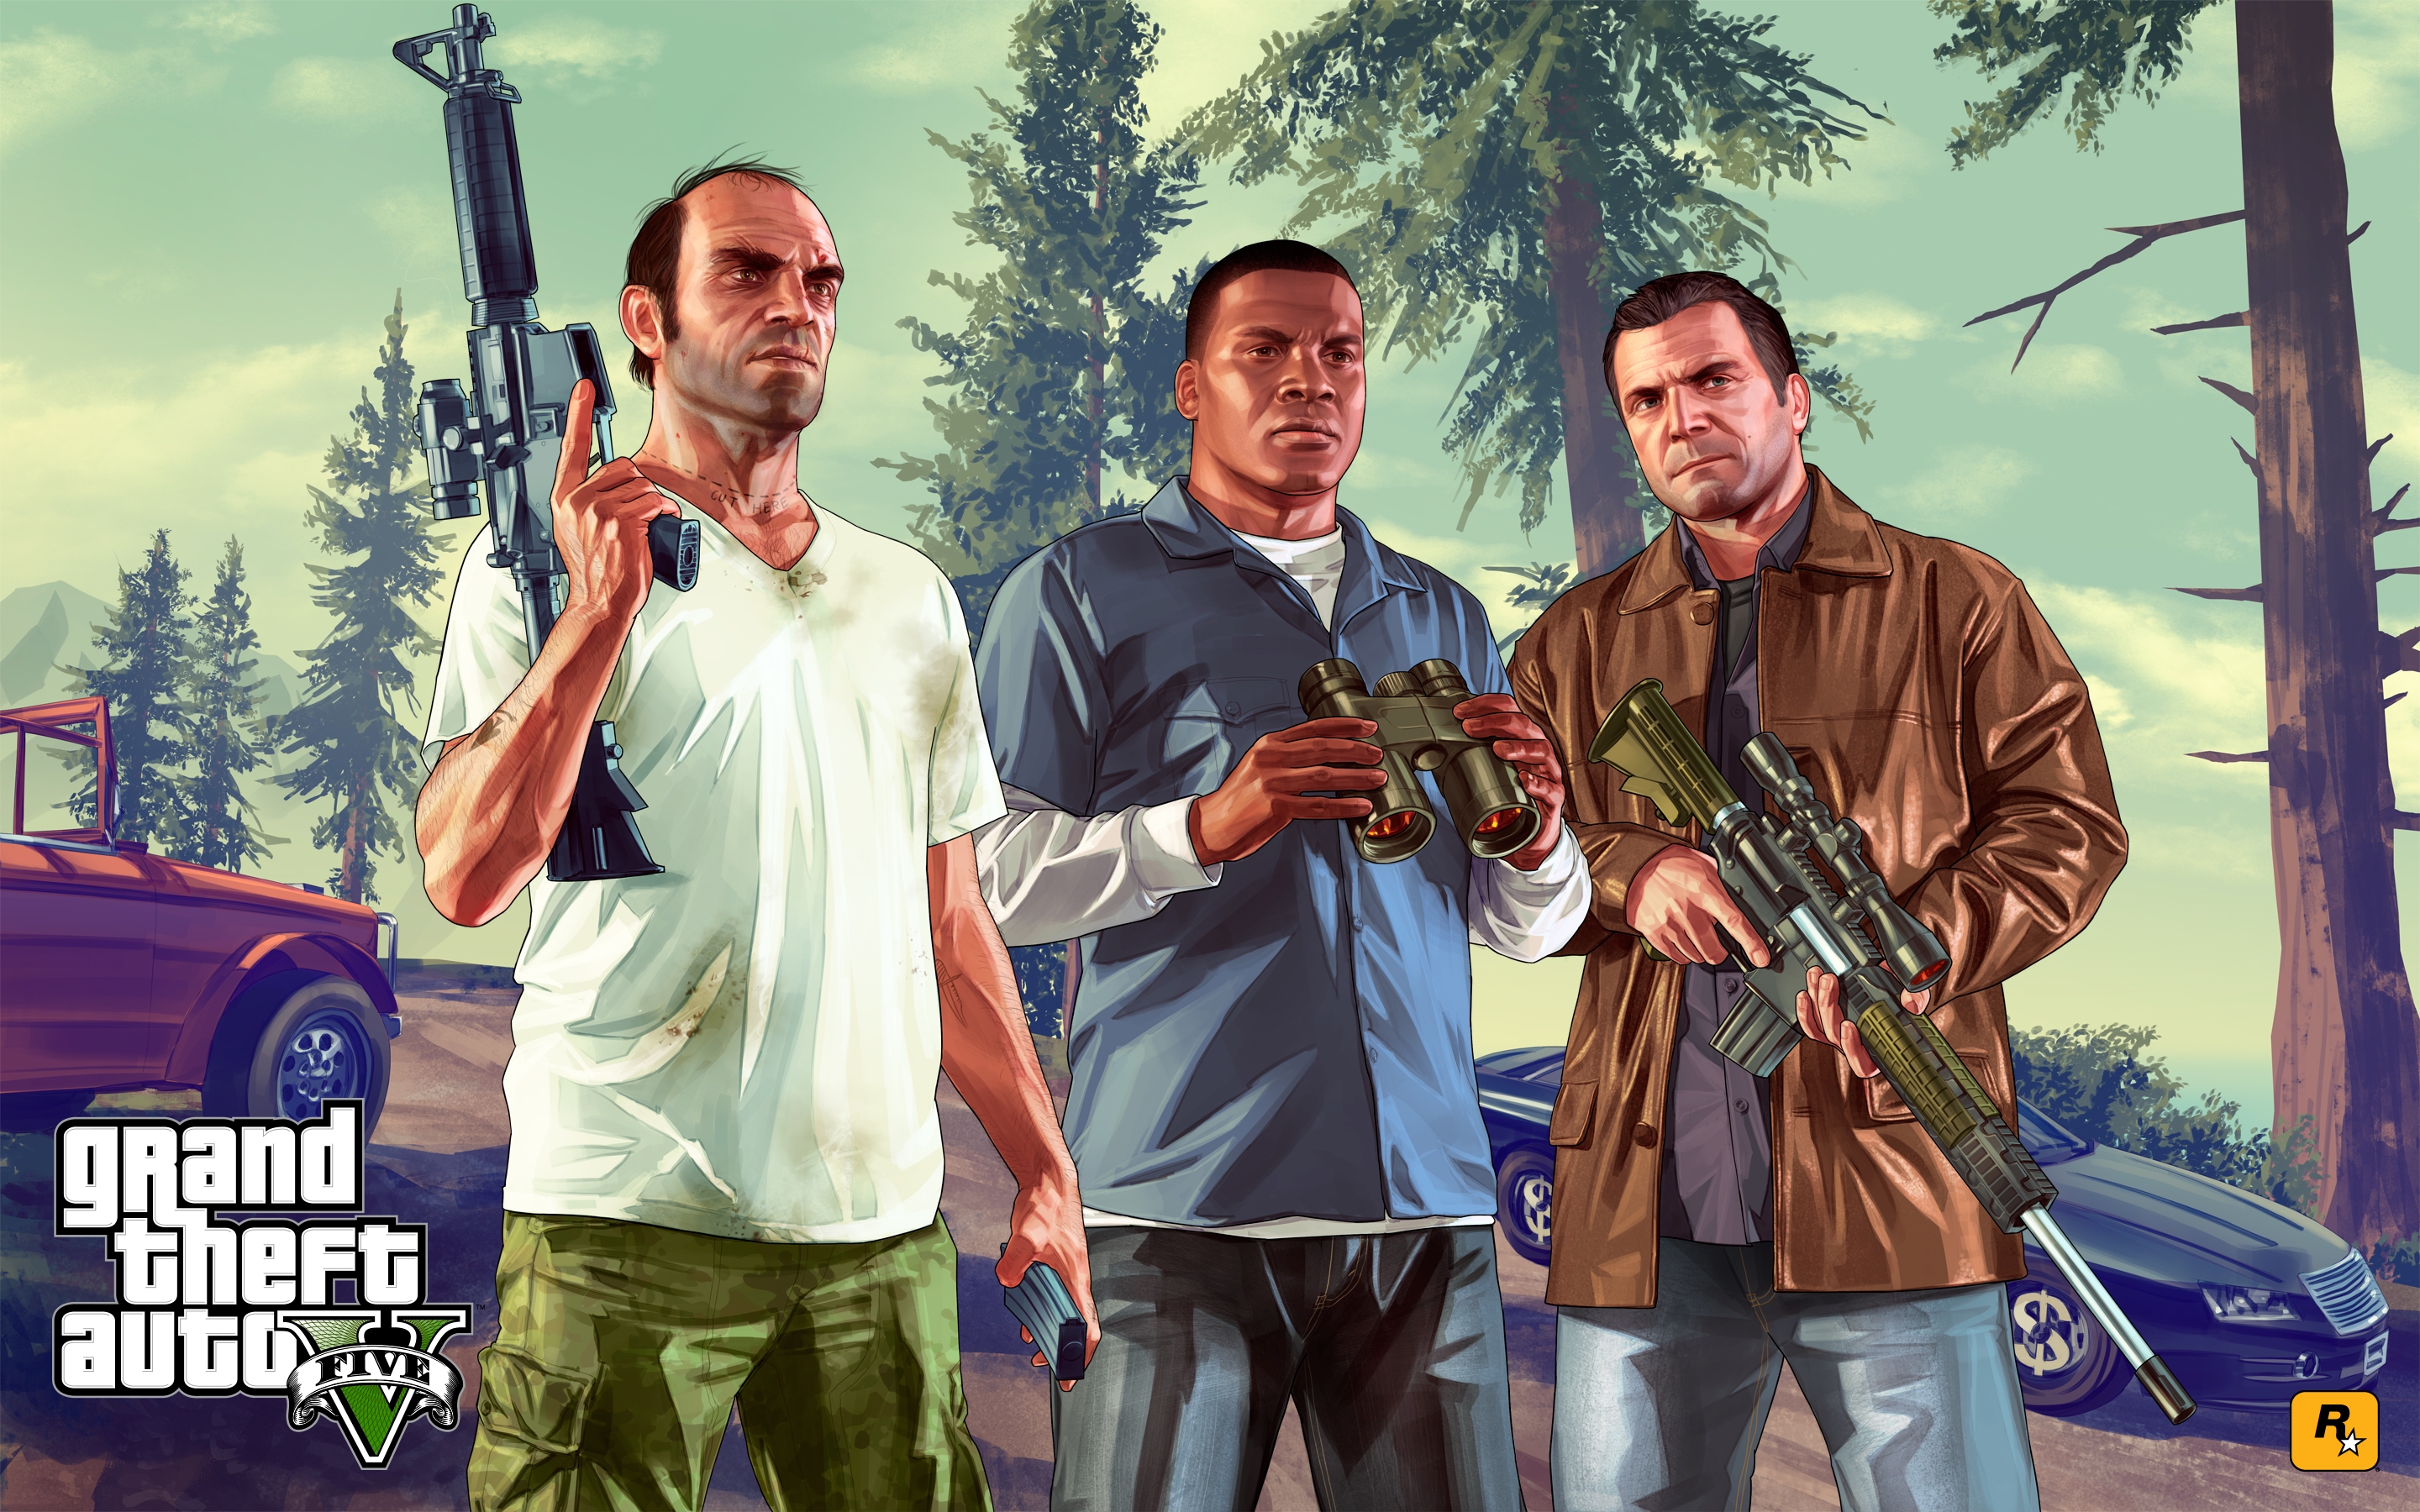 New Grand Theft Auto V for 2880 x 1800 Retina Display resolution